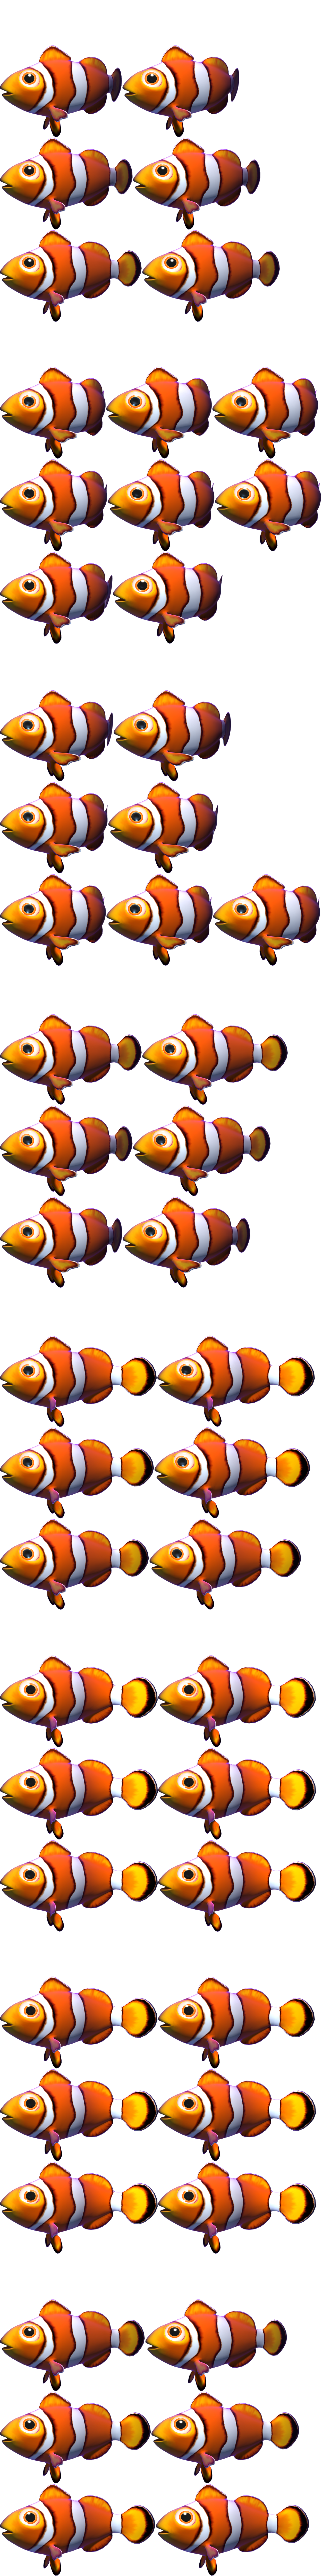 KID PIX 5: The STEAM Edition - Clownfish